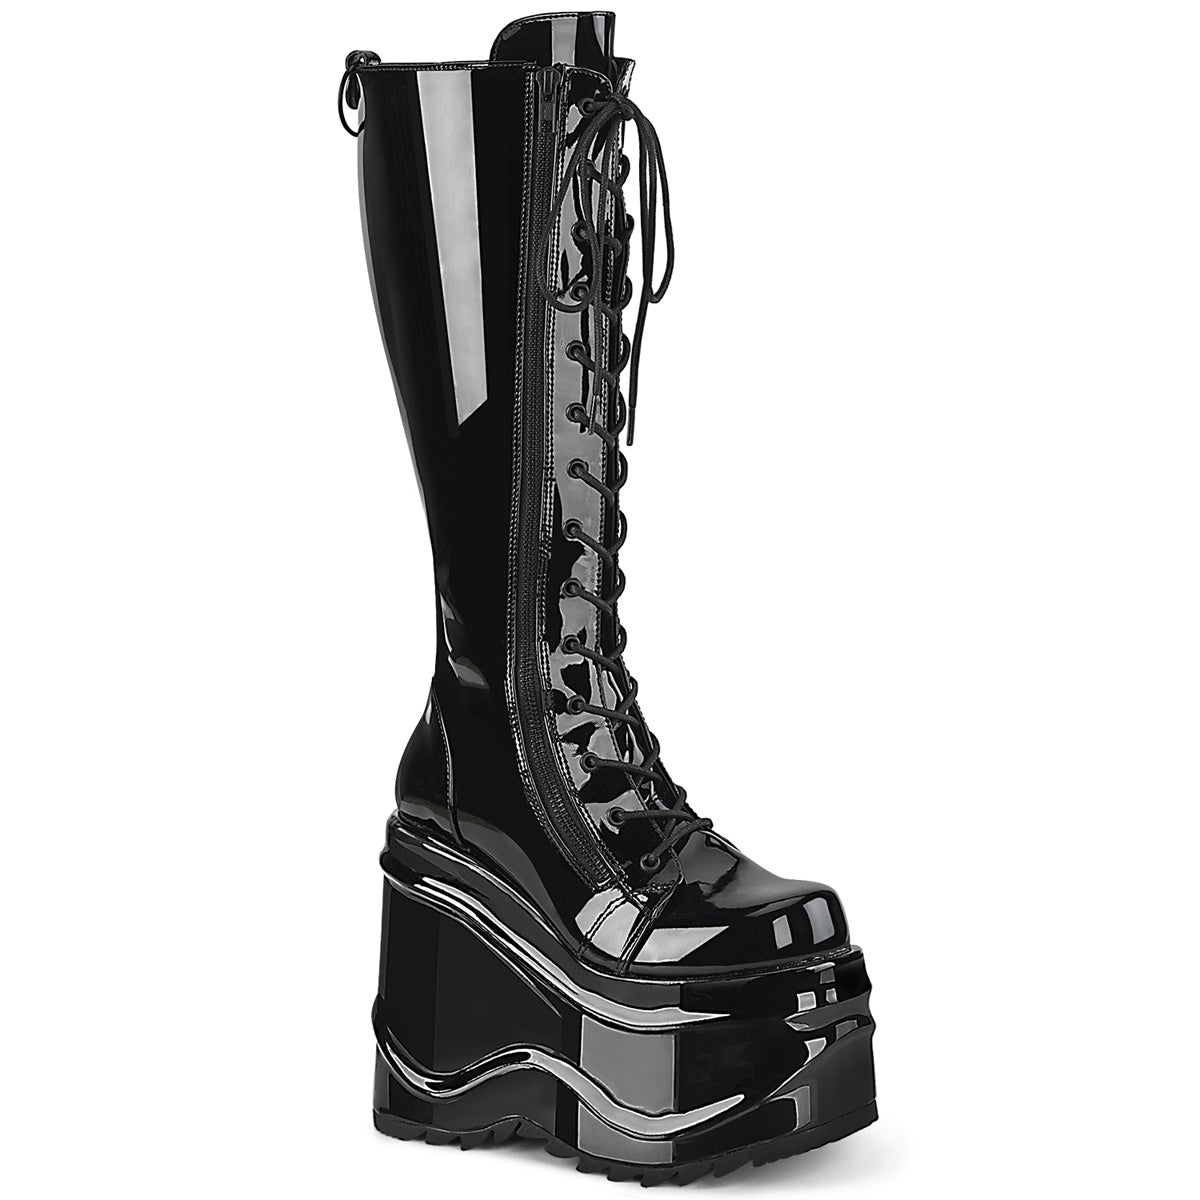 DemoniaCult WAVE 200 Platform Boots - From DemoniaCult Sold By Alternative Footwear